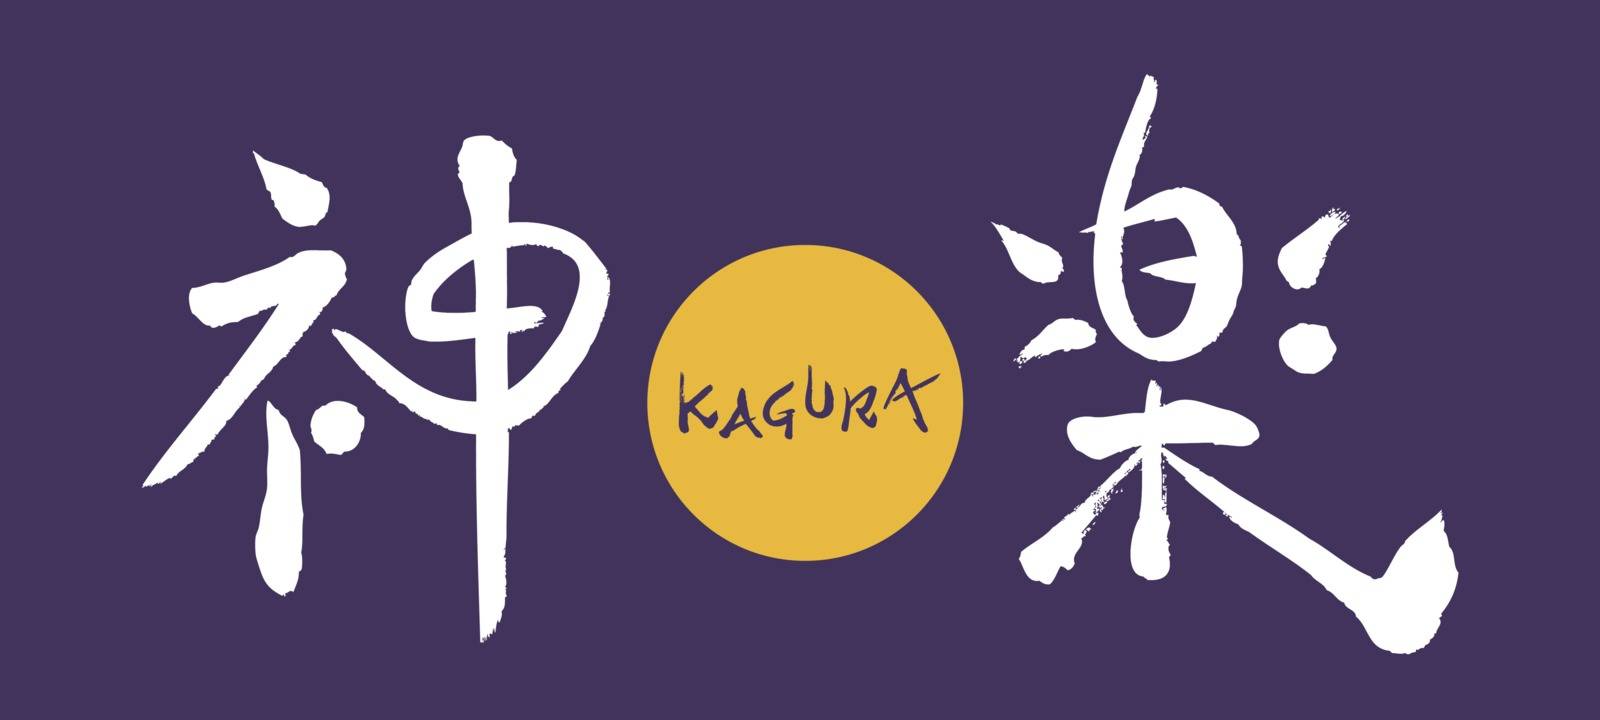 The character Kagura and full moon. by Umbrella